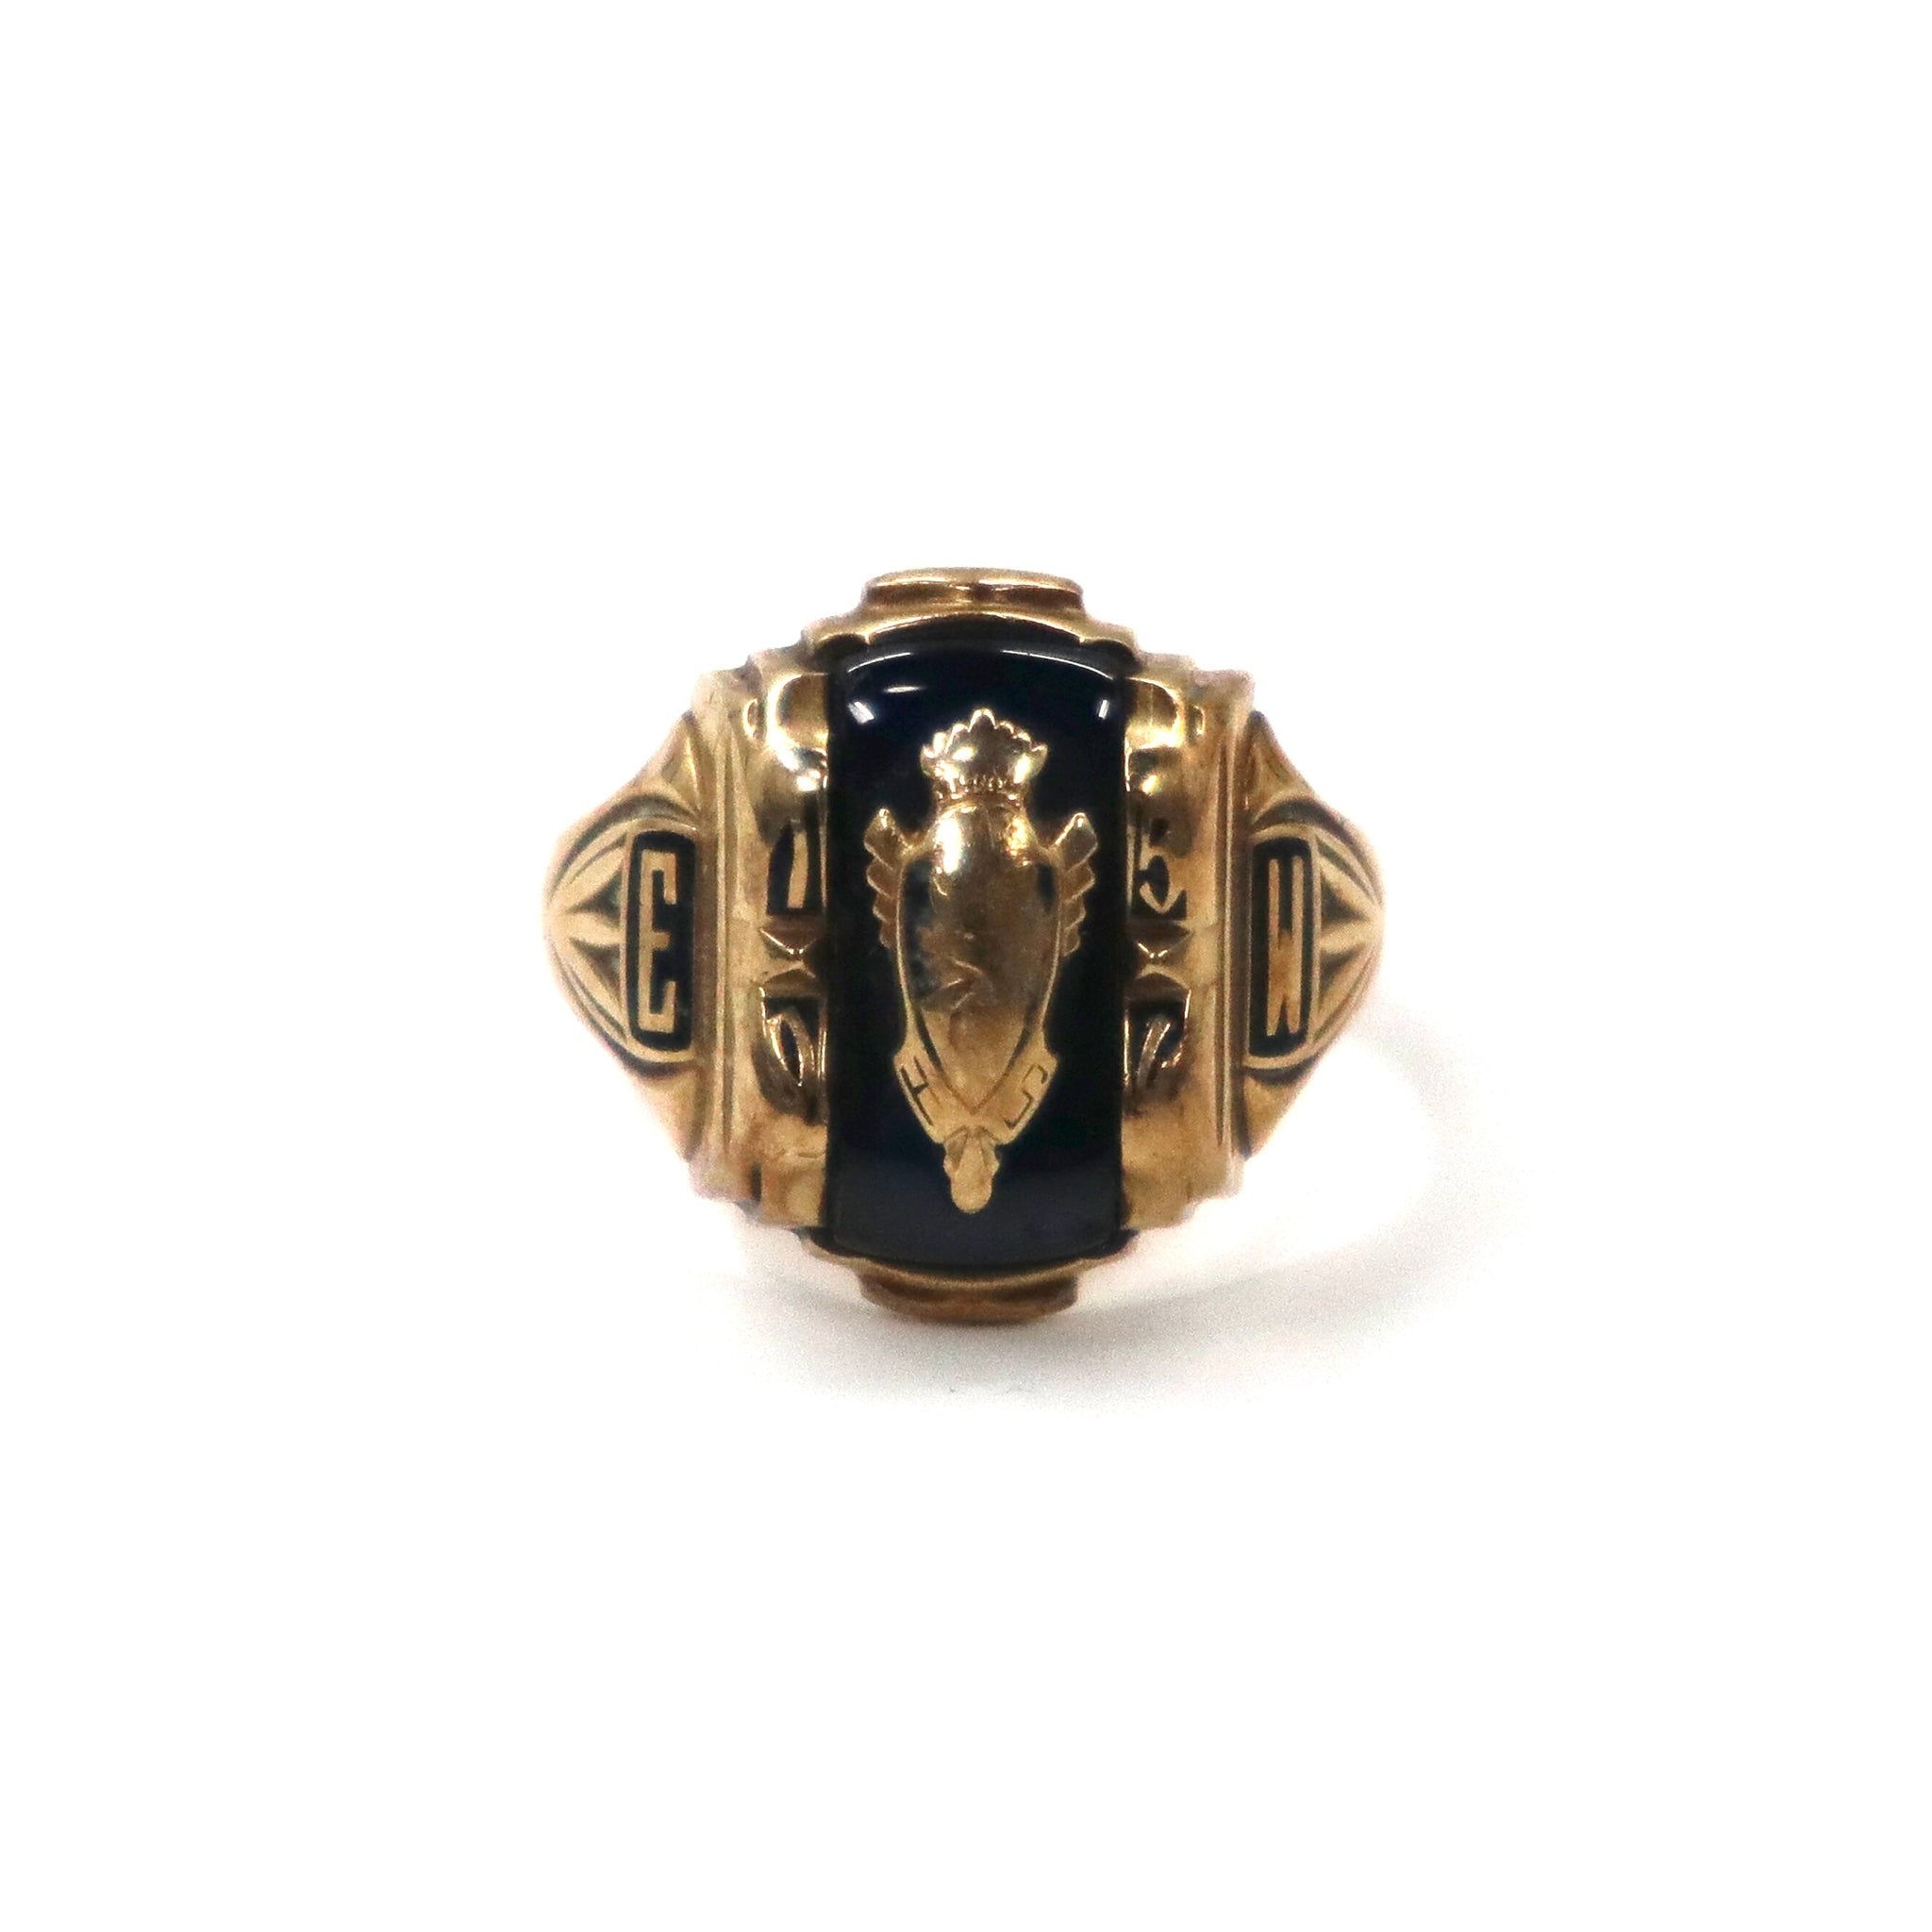 JOSTENS College Ring 10.5 US Gold 1954 MADE 10K (10 karat Gold